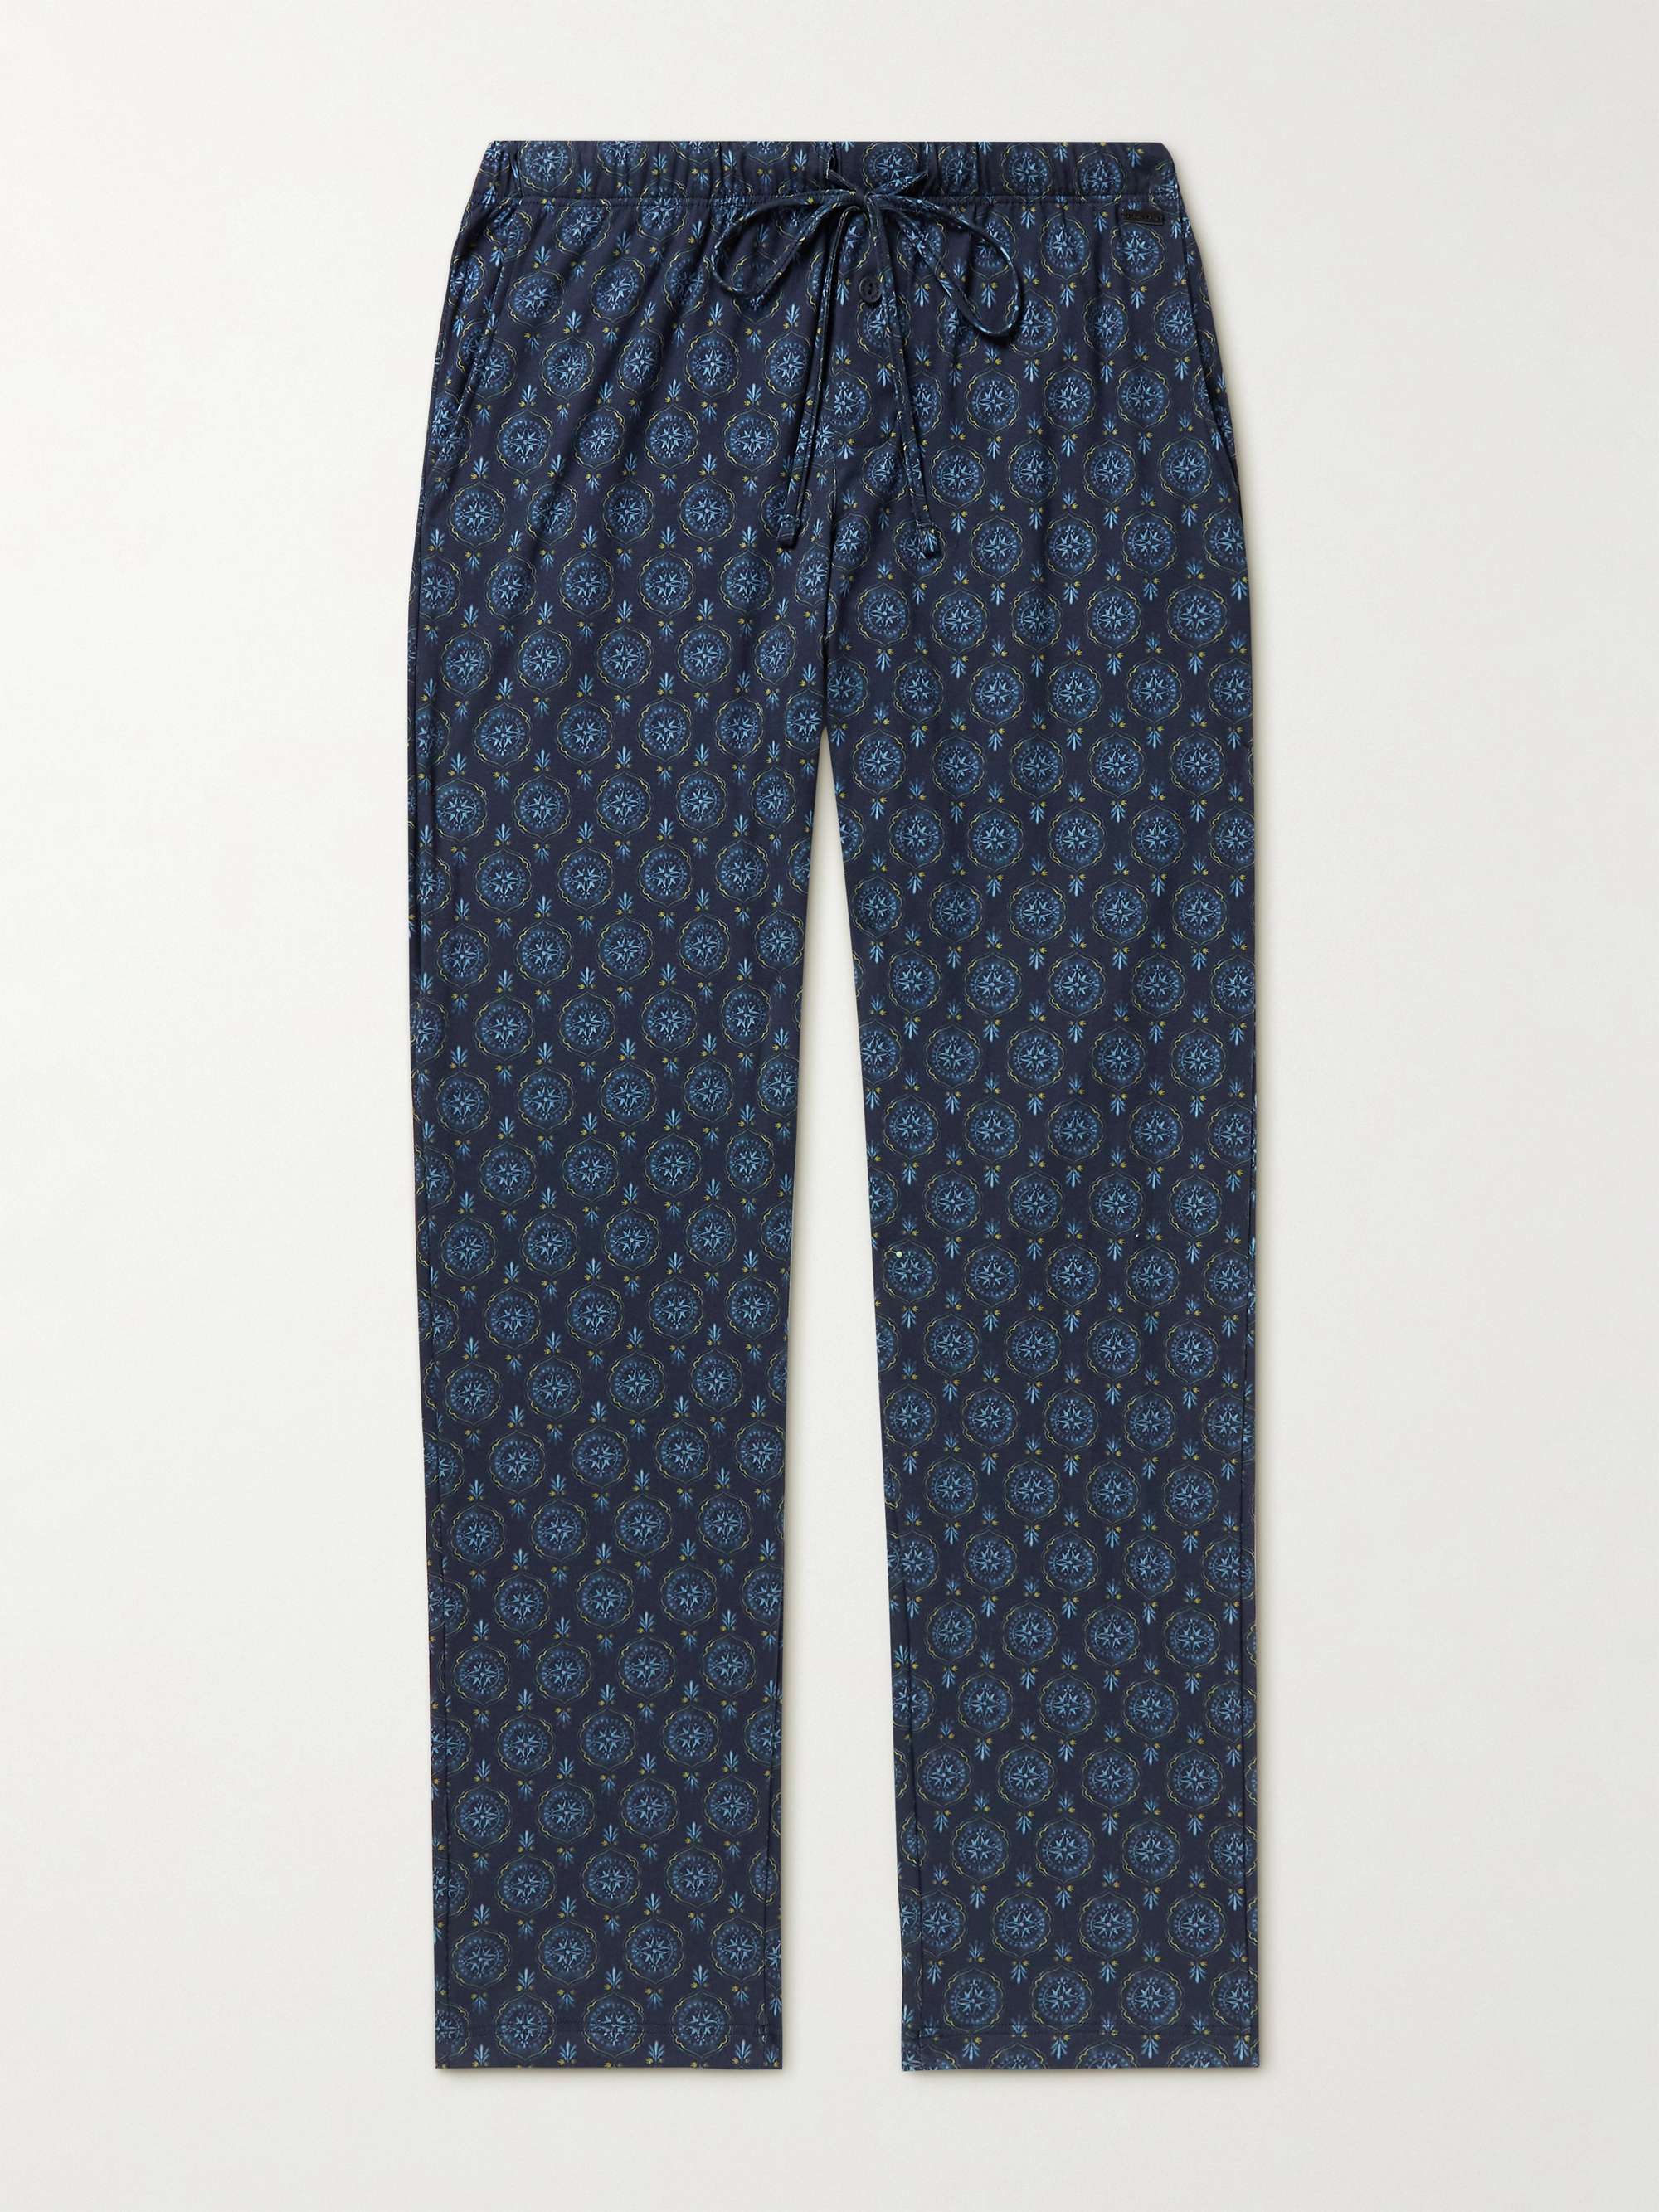 gris/bleu marine HANRO Night & Day Jersey Top & Pantalon homme pyjama ensemble cadeau